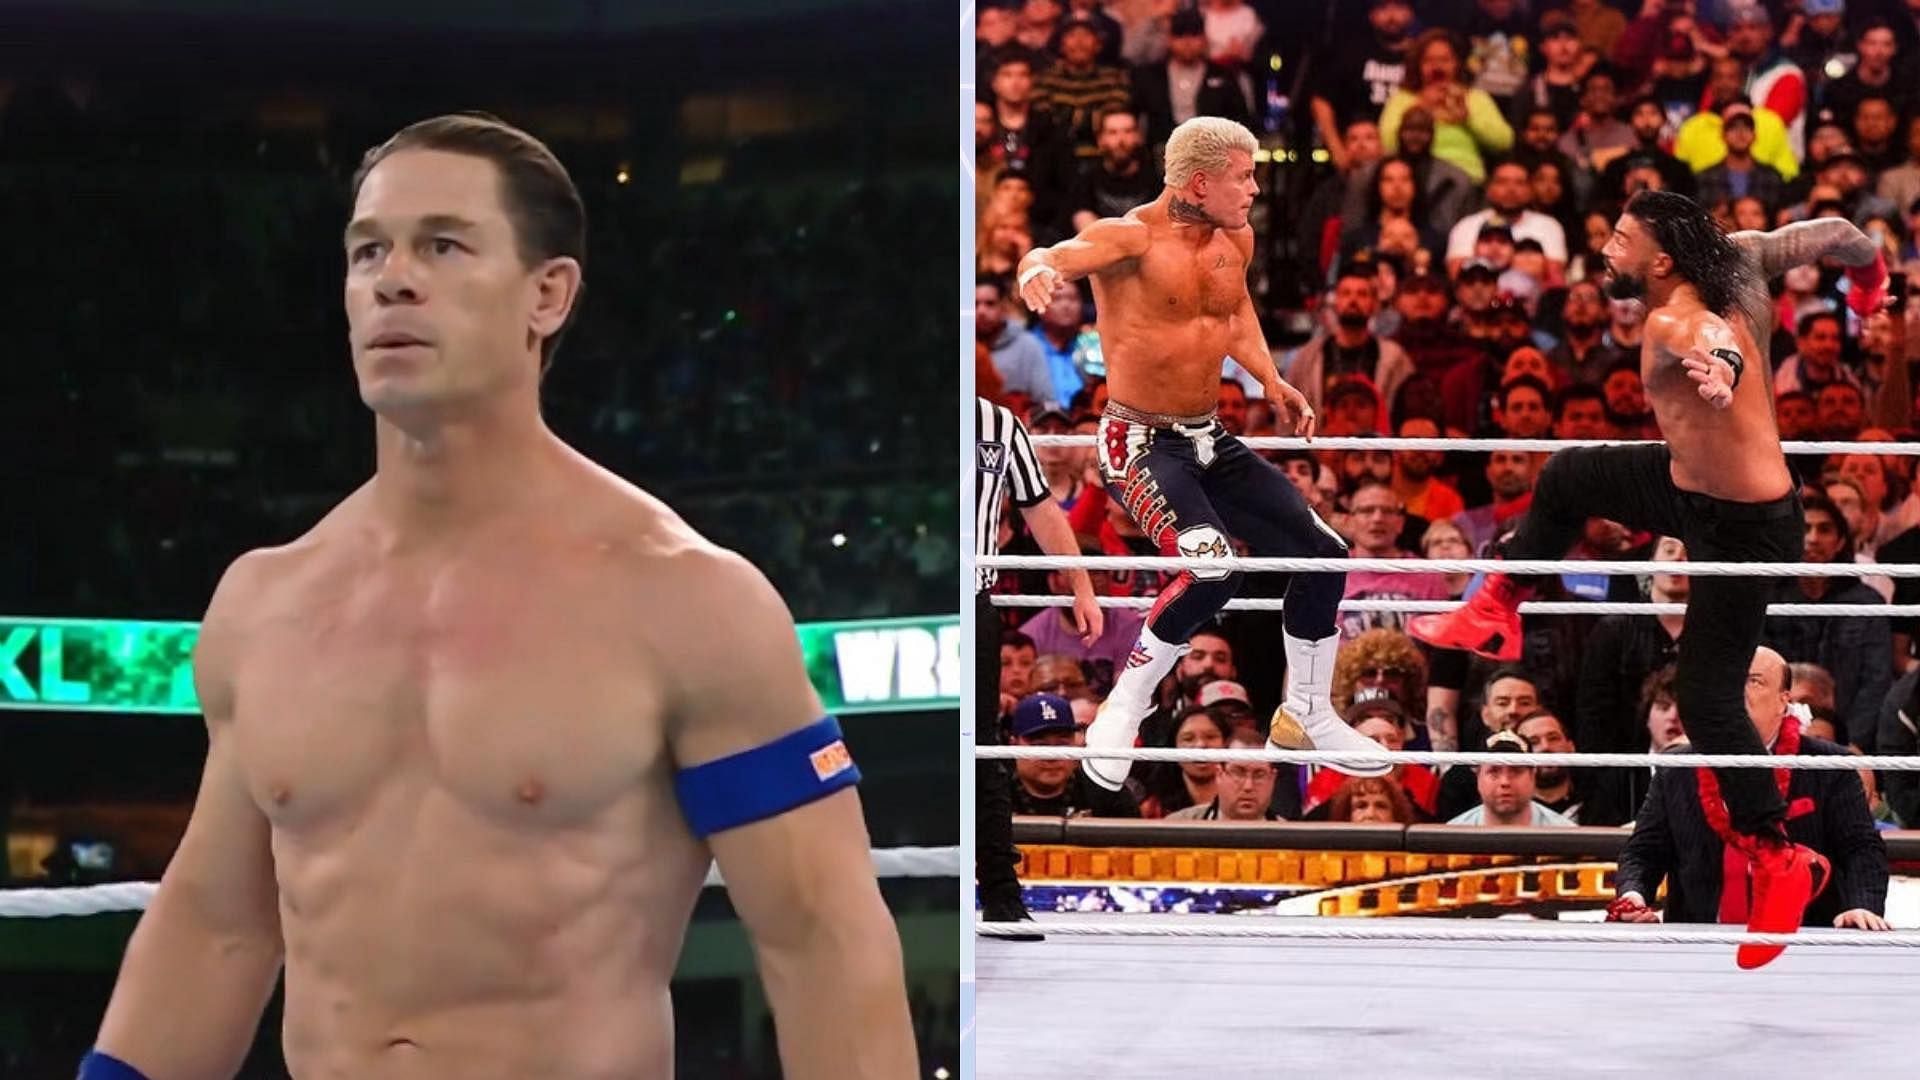 John Cena is a 16-time World Champion [Image credits: WWE